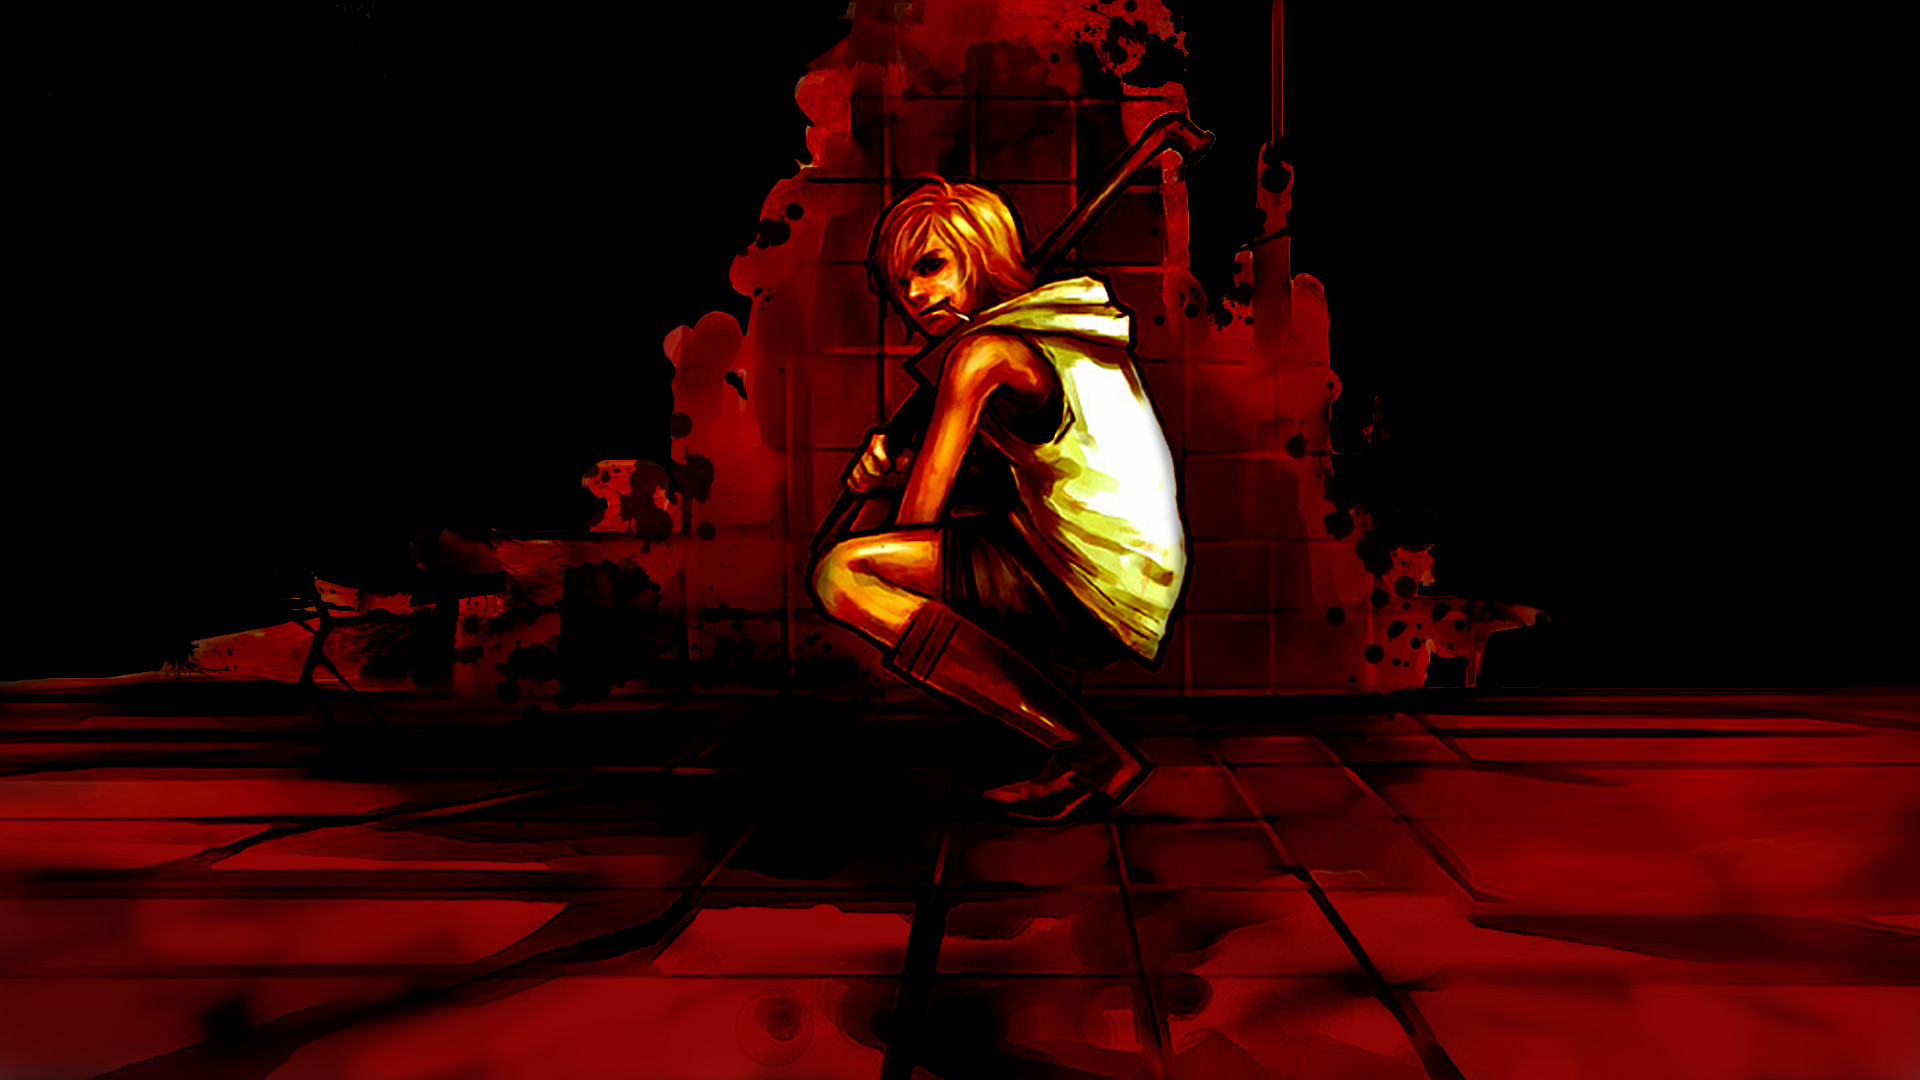 1920x1080 Silent Hill 3 Bloody Wallpaper v2.0 by Razpootin